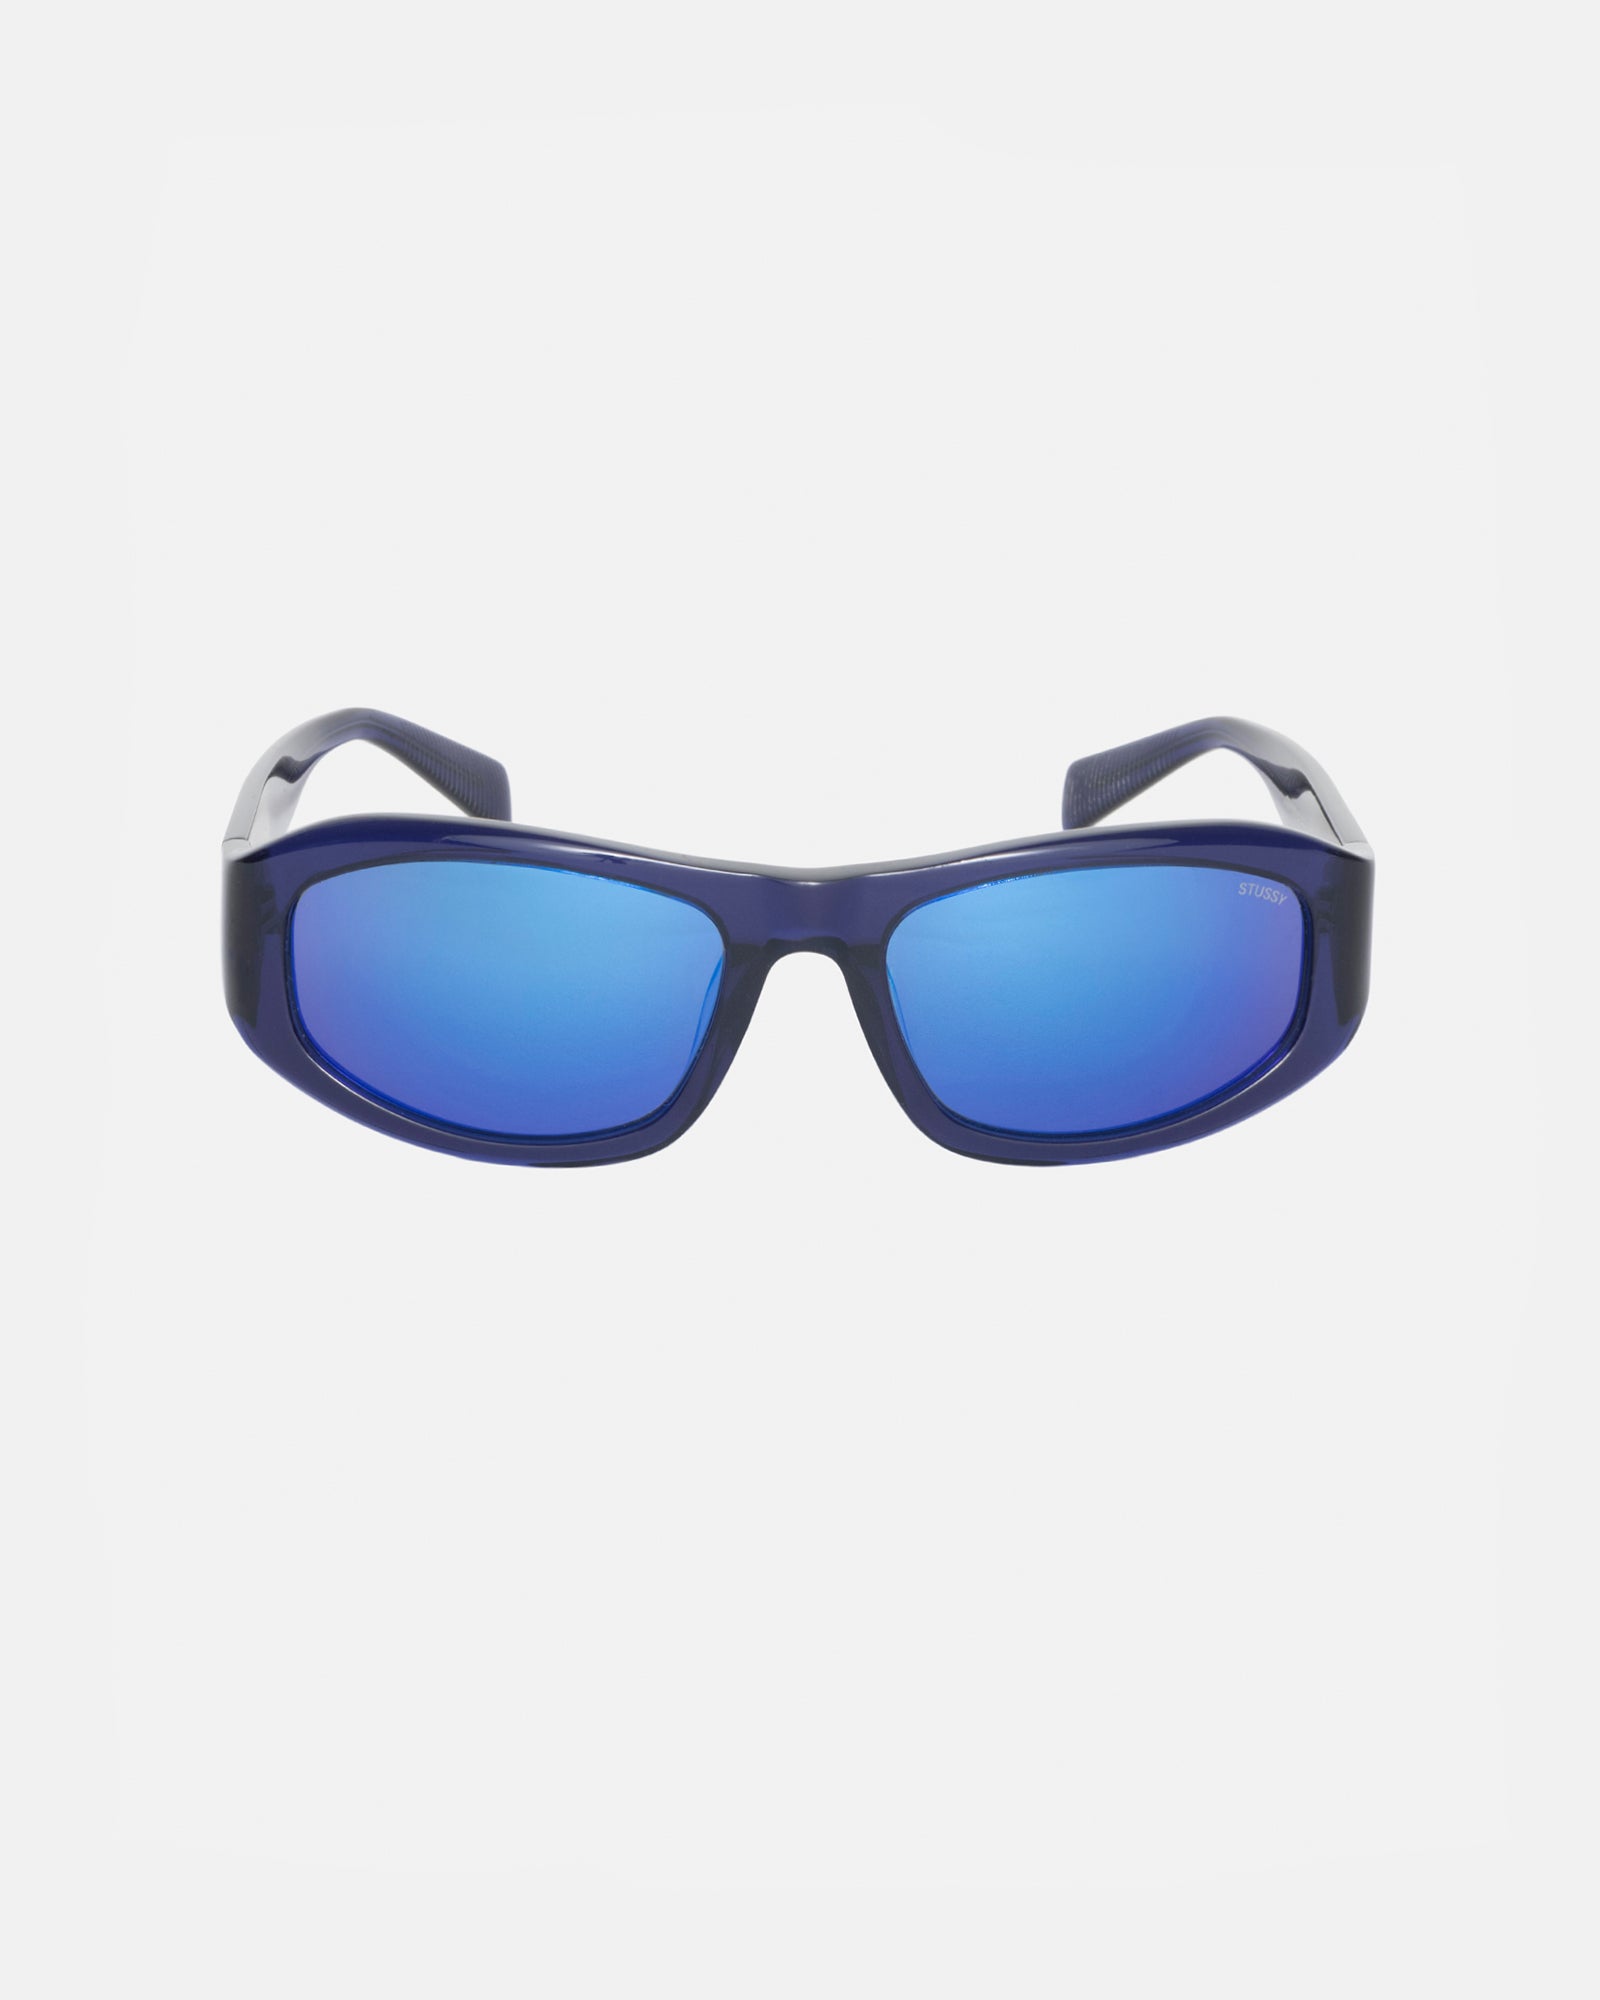 Stüssy Landon Sunglasses Ultraviolet / Midnight Flare Lens Eyewear